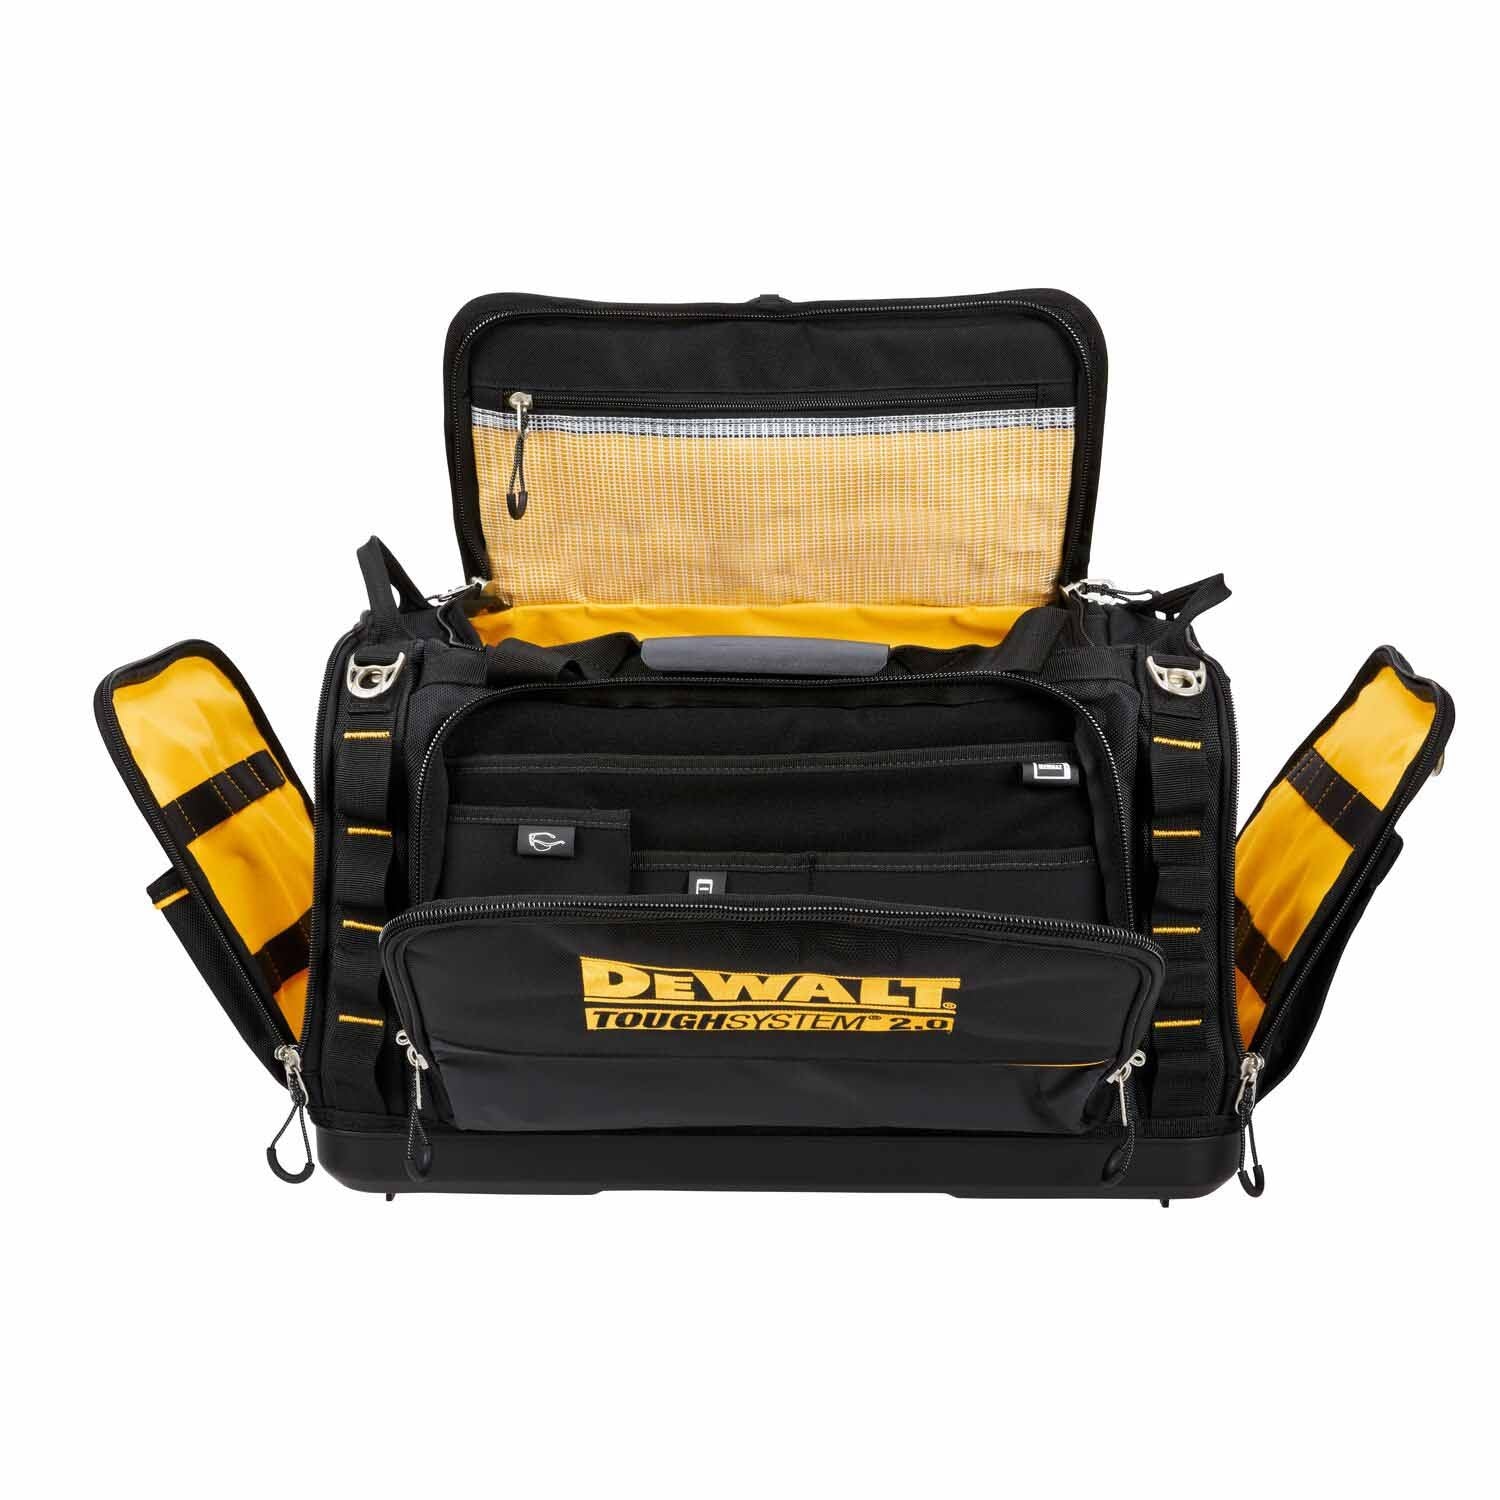 DeWalt DWST08350 Toughsystem 2.0 22" Tool Bag